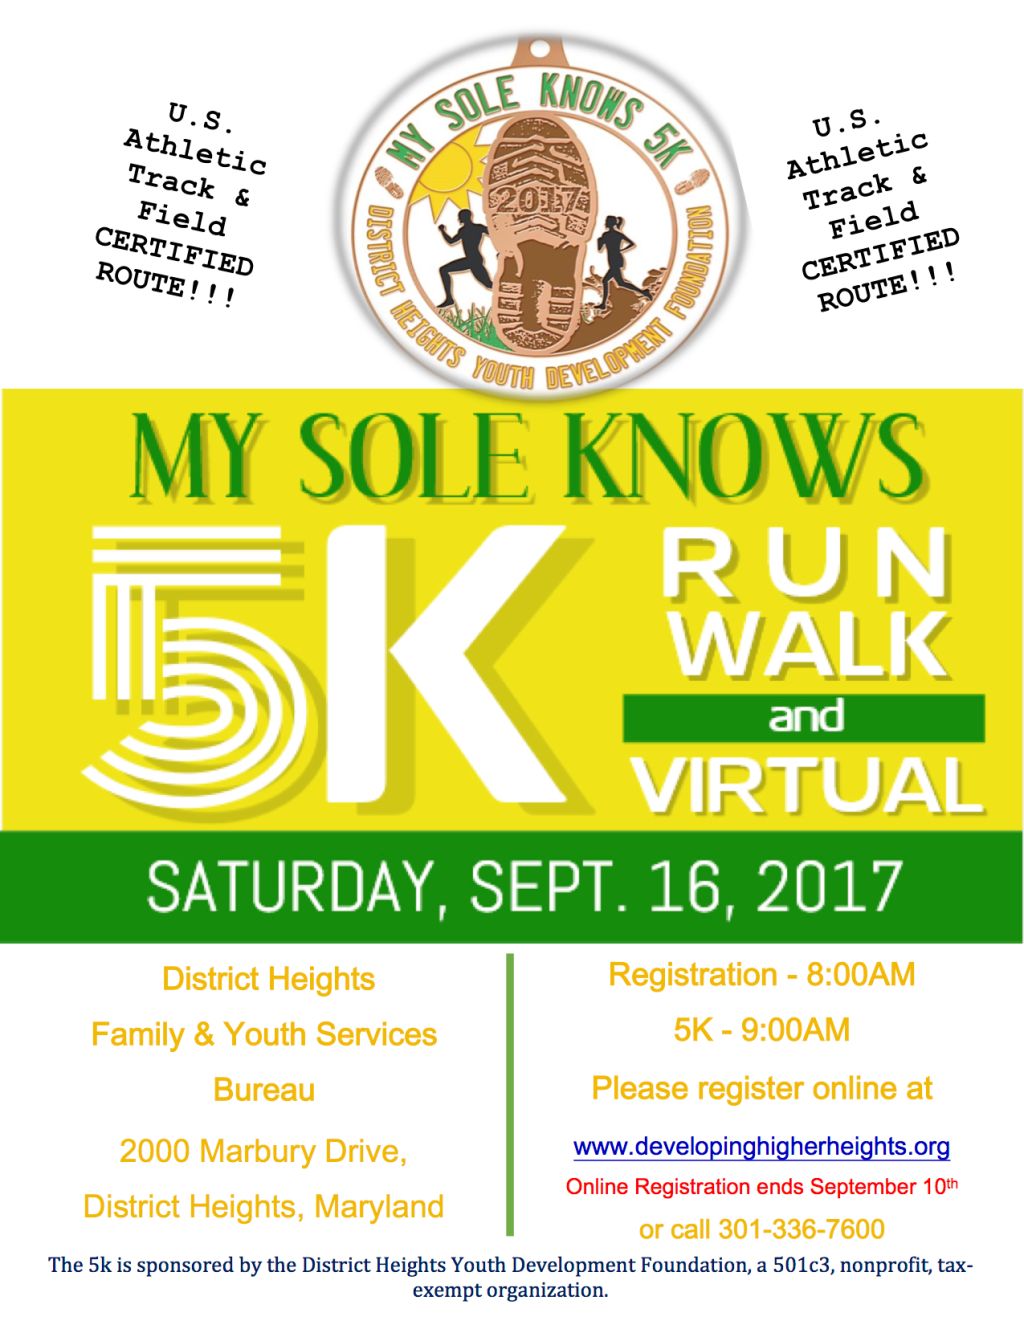 The My Sole Knows 5K Walk/Run